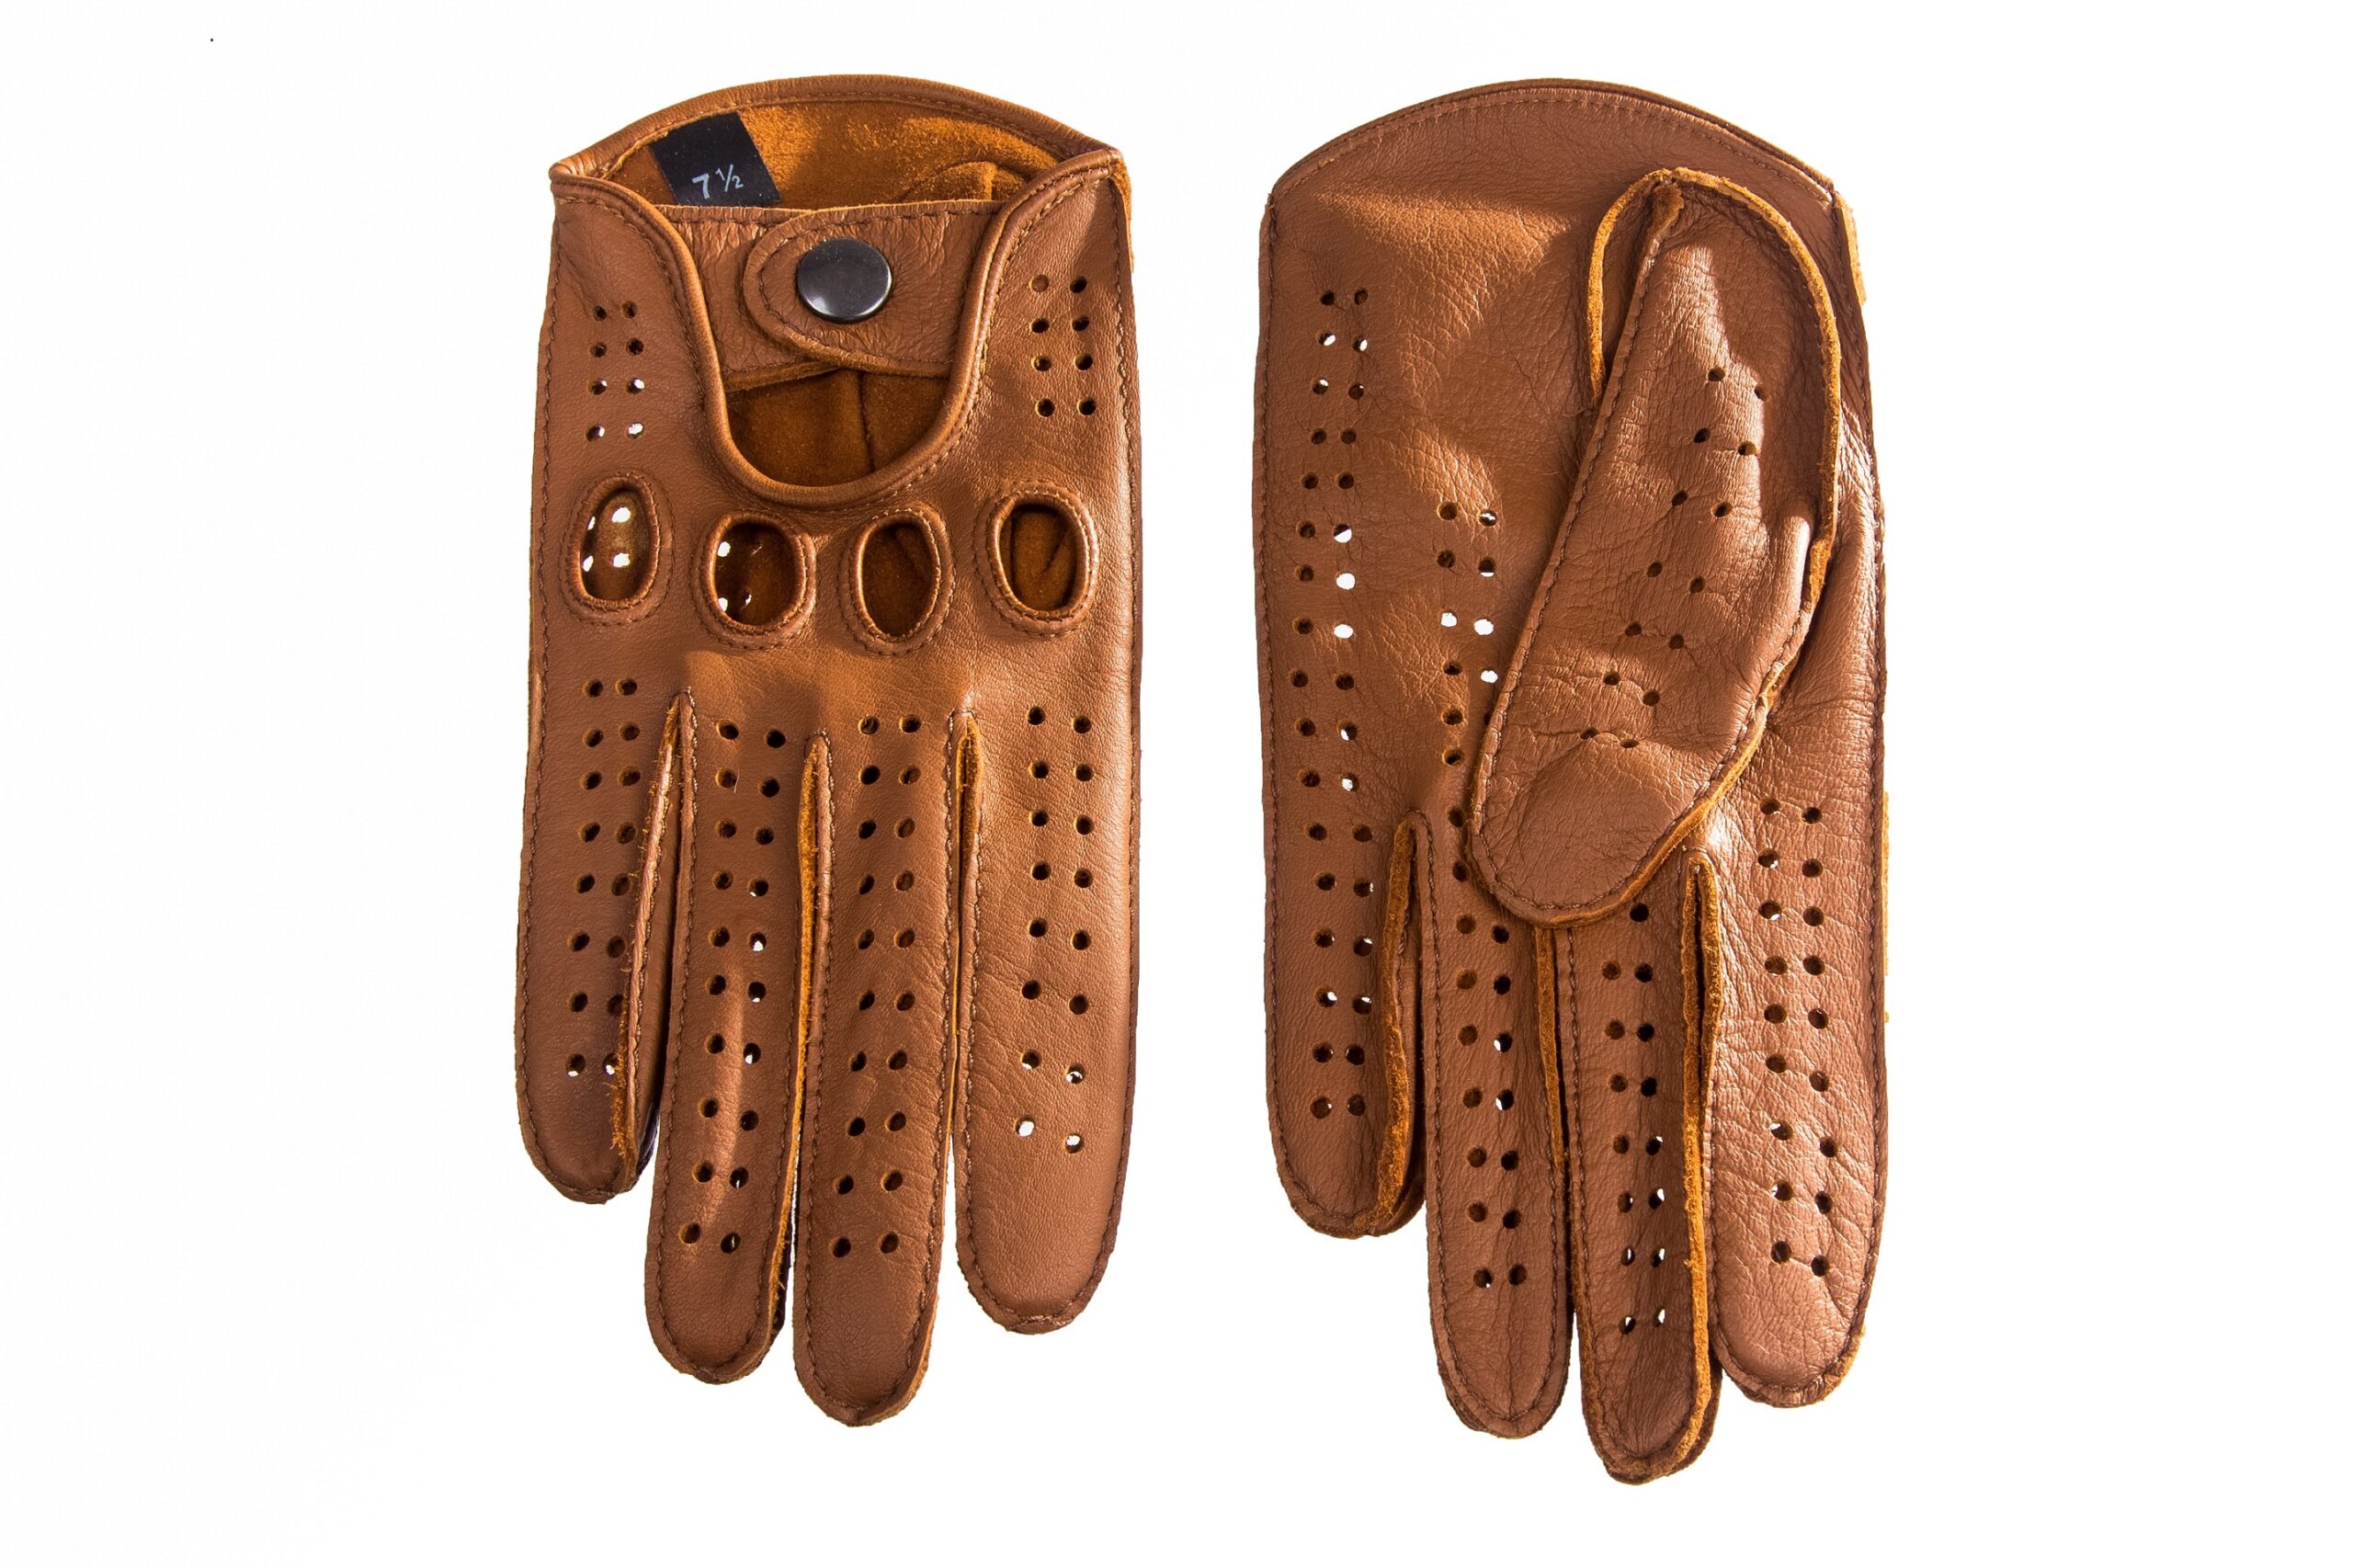 https://erstaunlich-lederhandschuhe.de/wp-content/uploads/2020/02/mens-driving-gloves-touchscreen-leather-camel-color-scaled.jpg